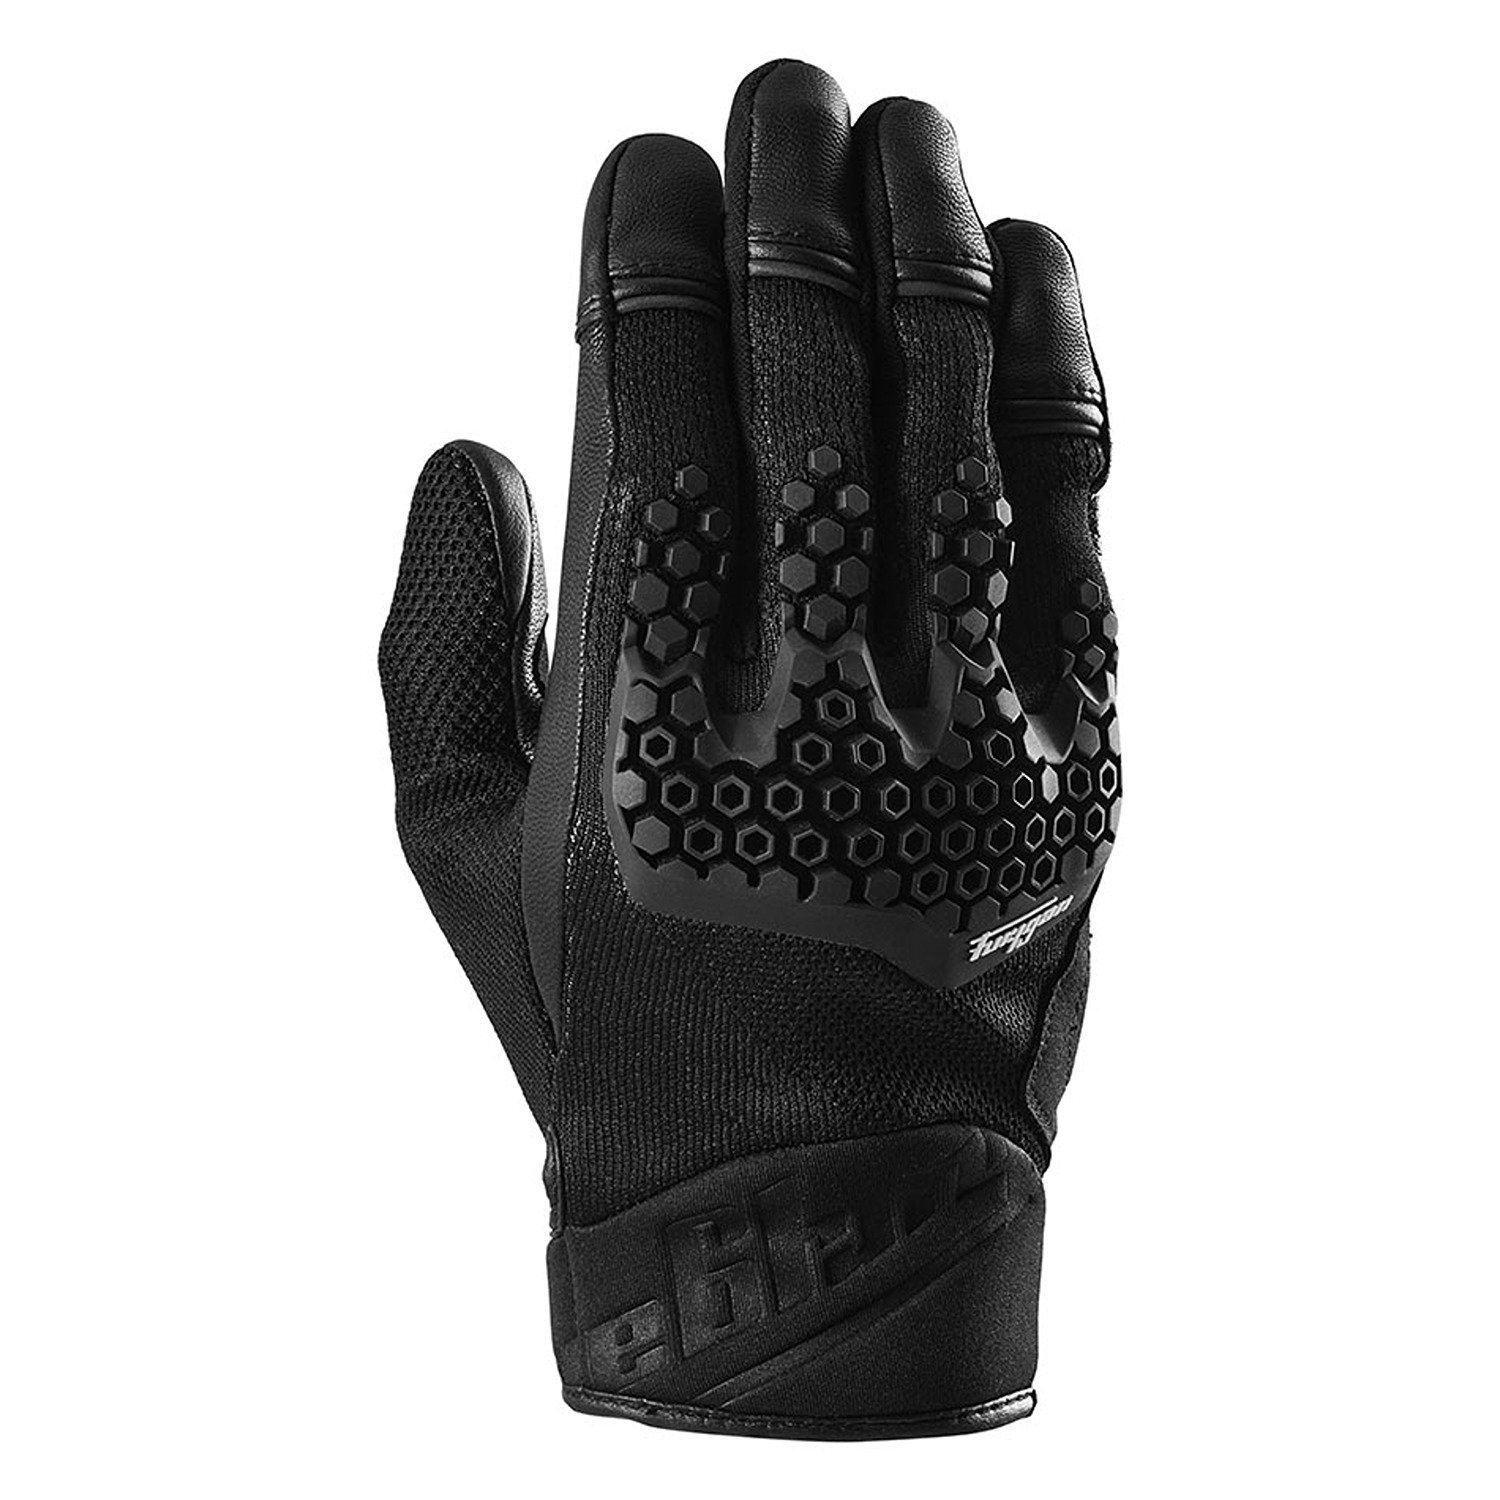 Image of Furygan Jack Gloves Black Size 3XL ID 3435980383589